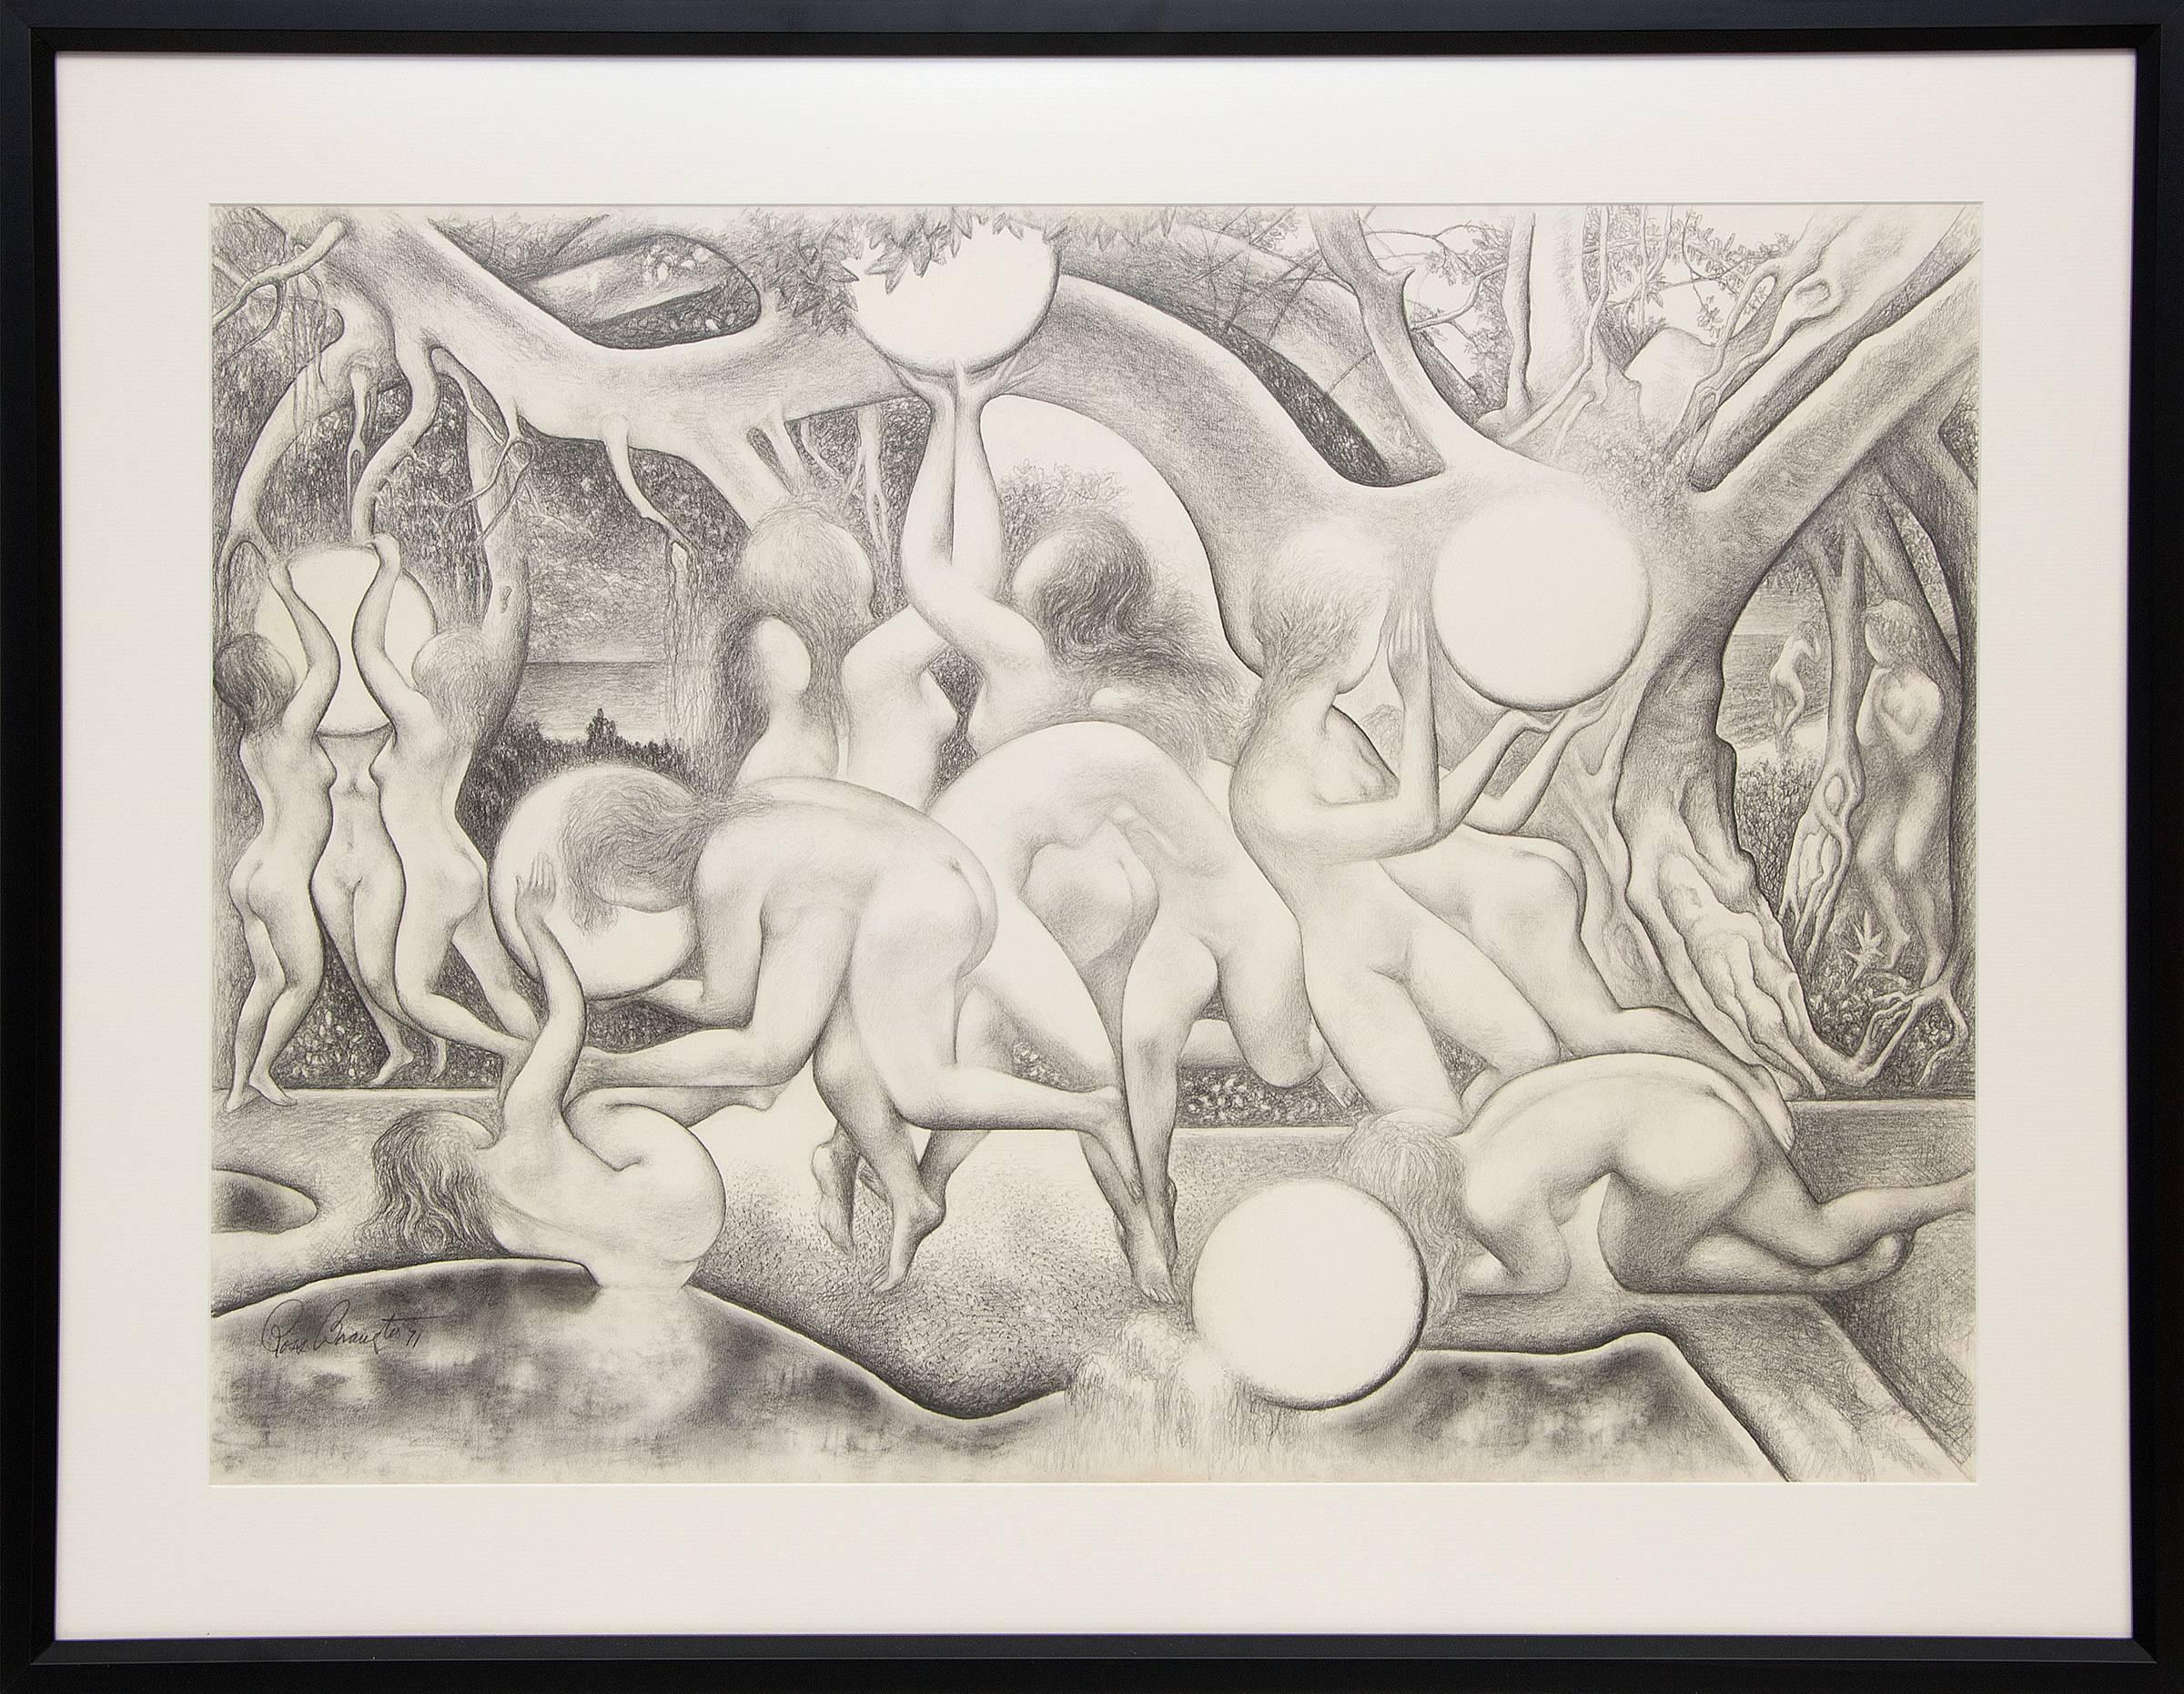 Nude Figures in Landscape (Black & White Modernist Composition) - Art by Ross Eugene Braught